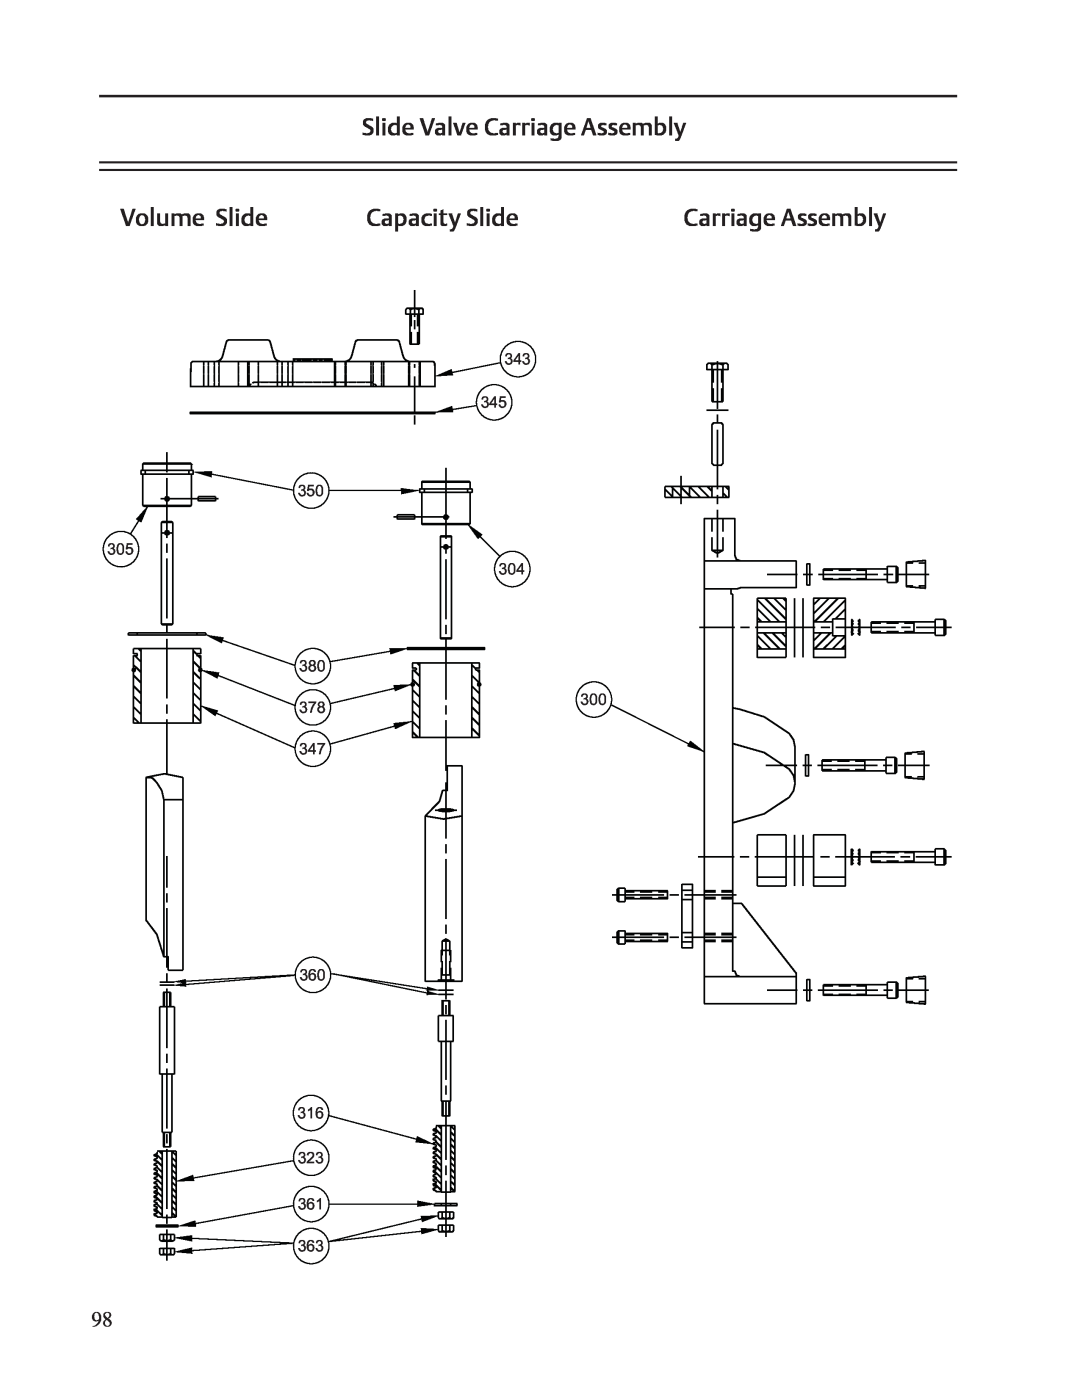 Emerson VSS, VSR, VSM service manual Slide Valve Carriage Assembly, Volume Slide, Capacity Slide 